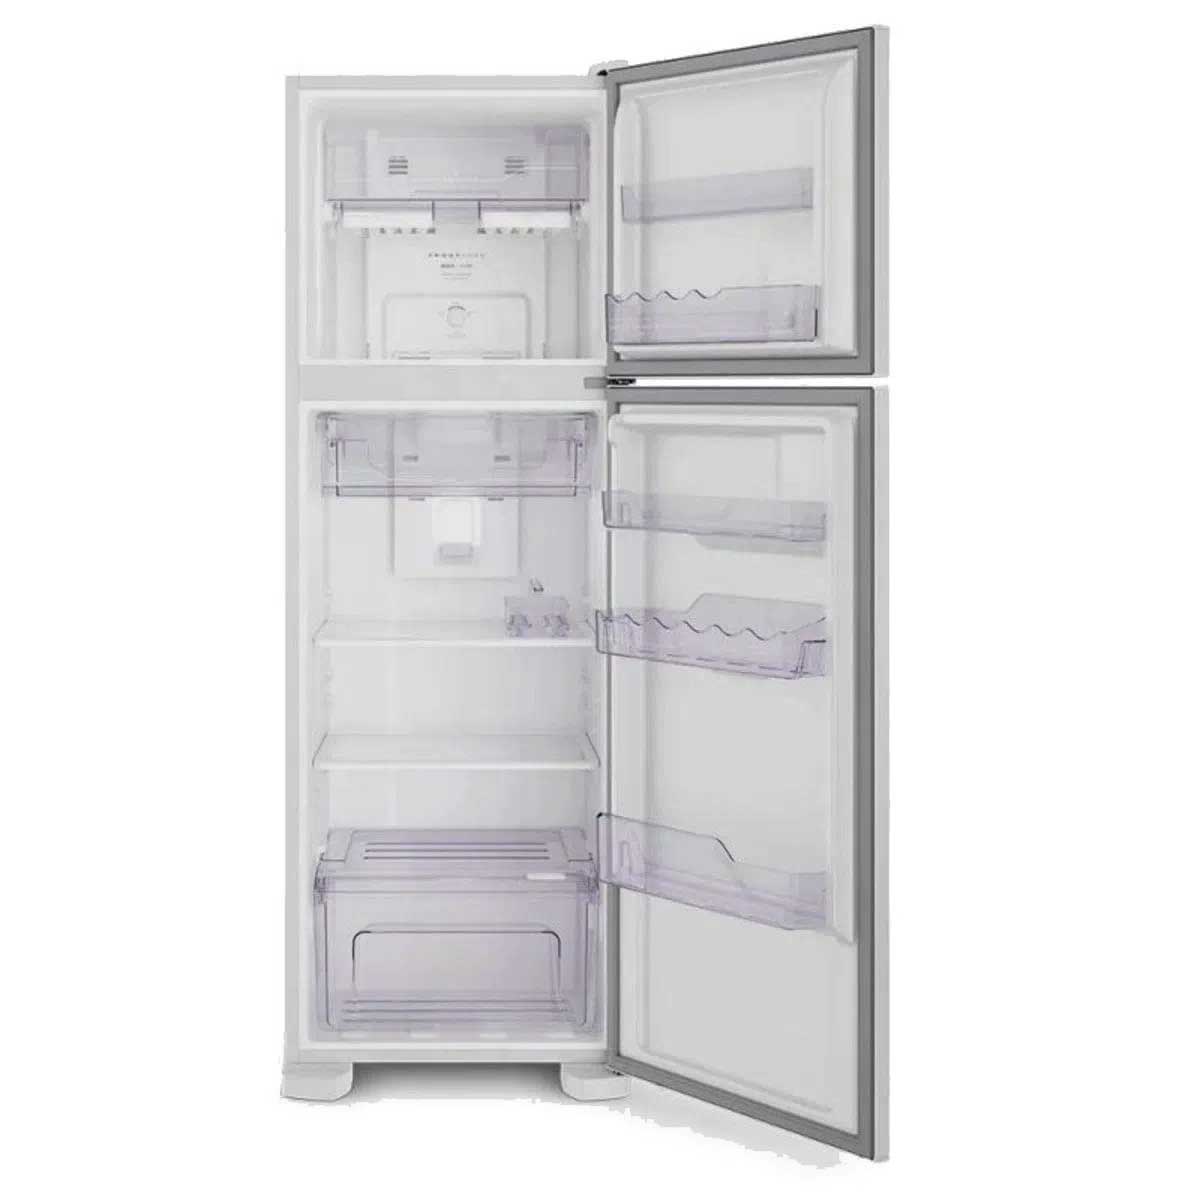 geladeira-electrolux-frost-free-duplex-2-portas-dfn41-371-litros-branco-220v-3.jpg